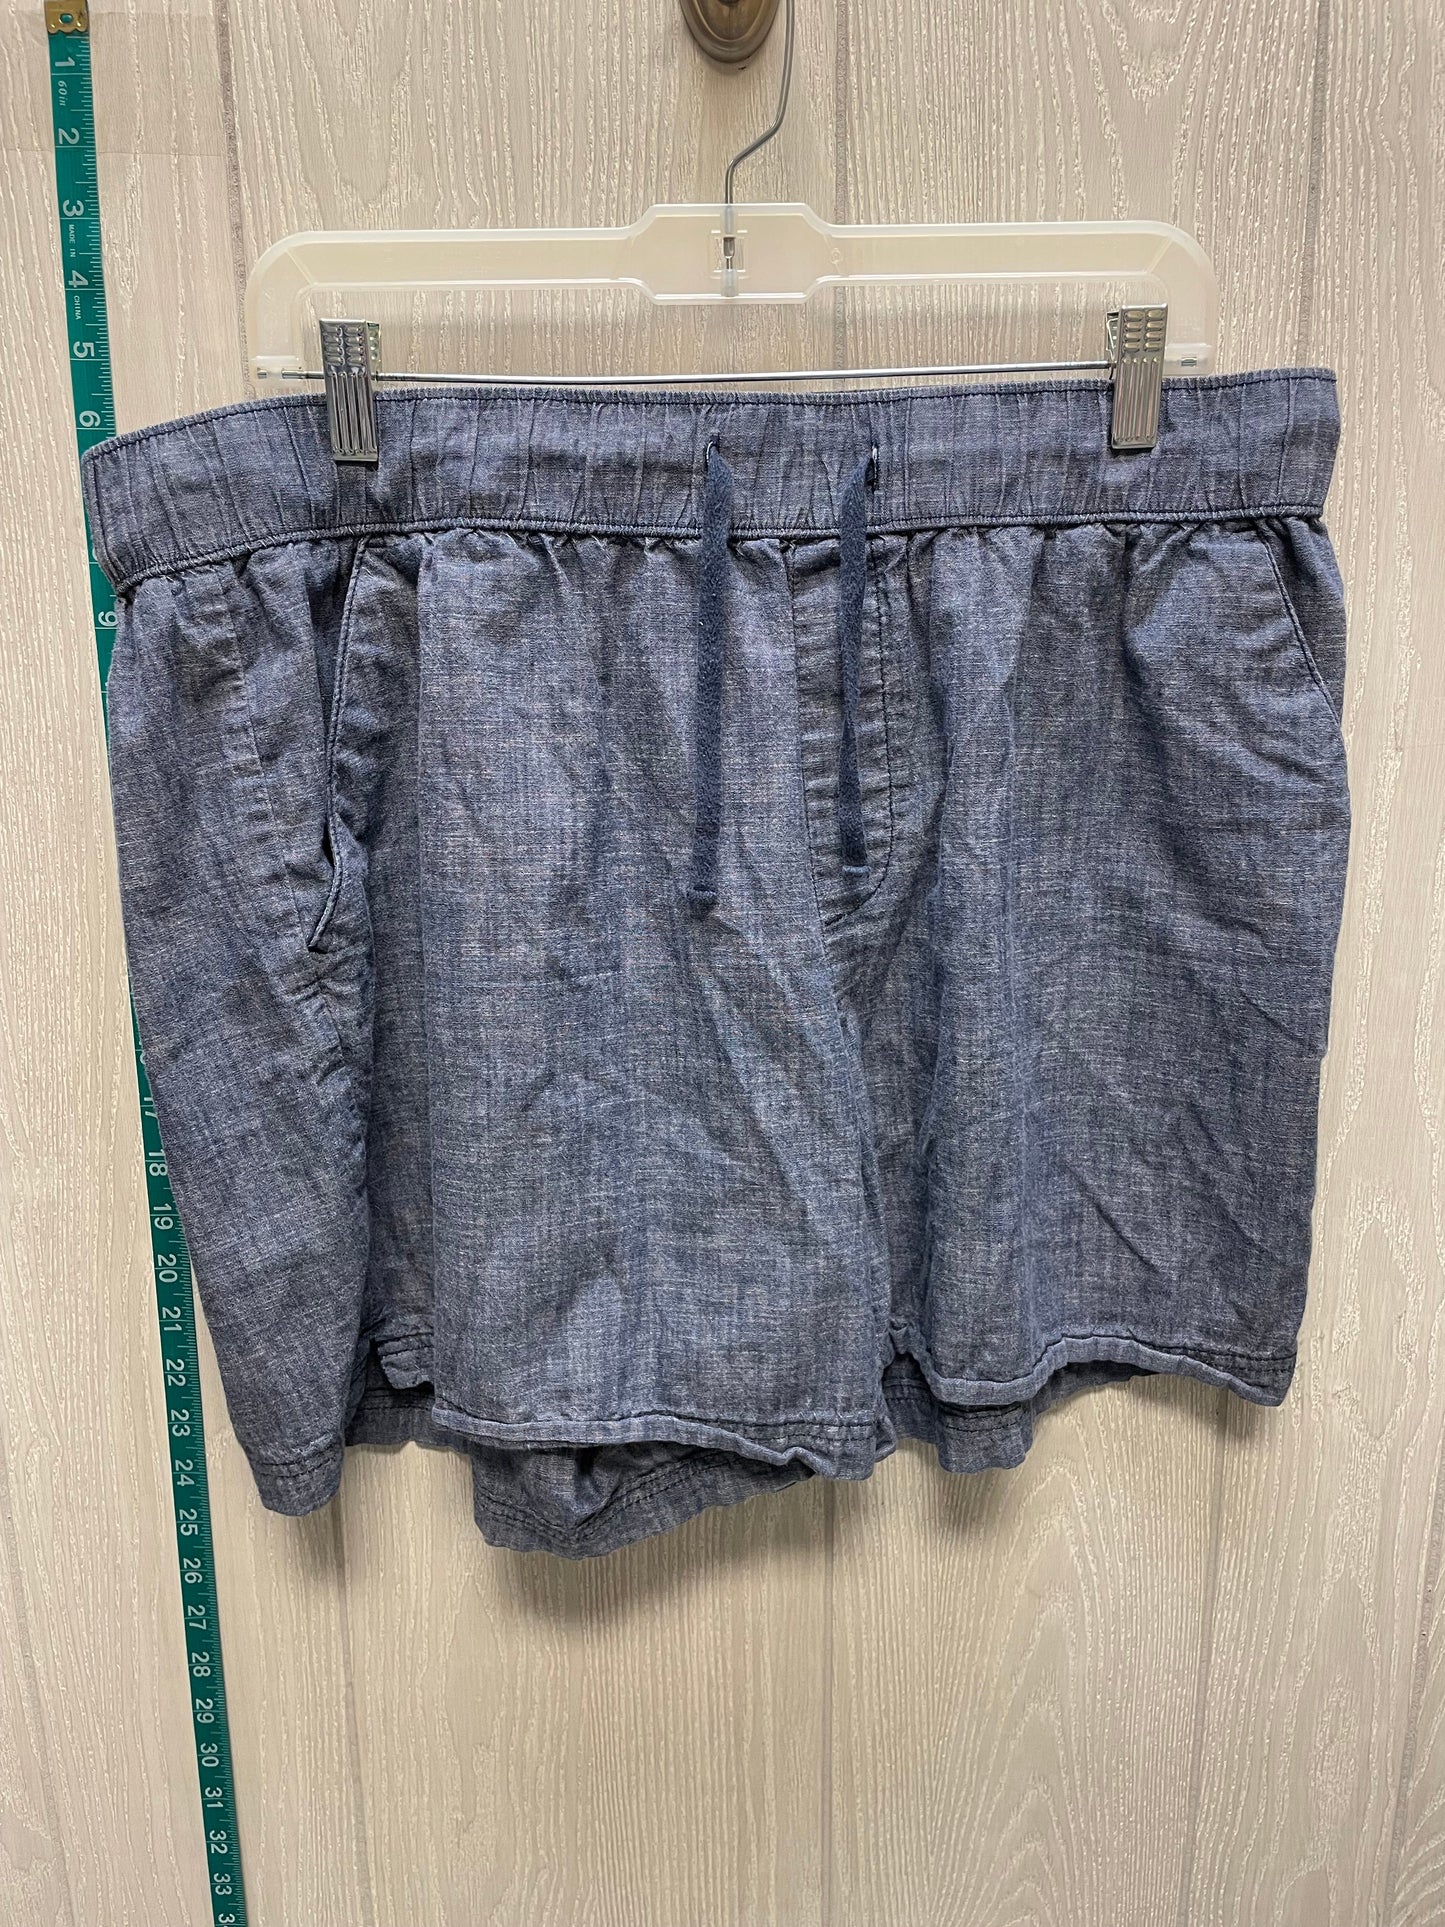 Blue Shorts Bcg, Size 1x